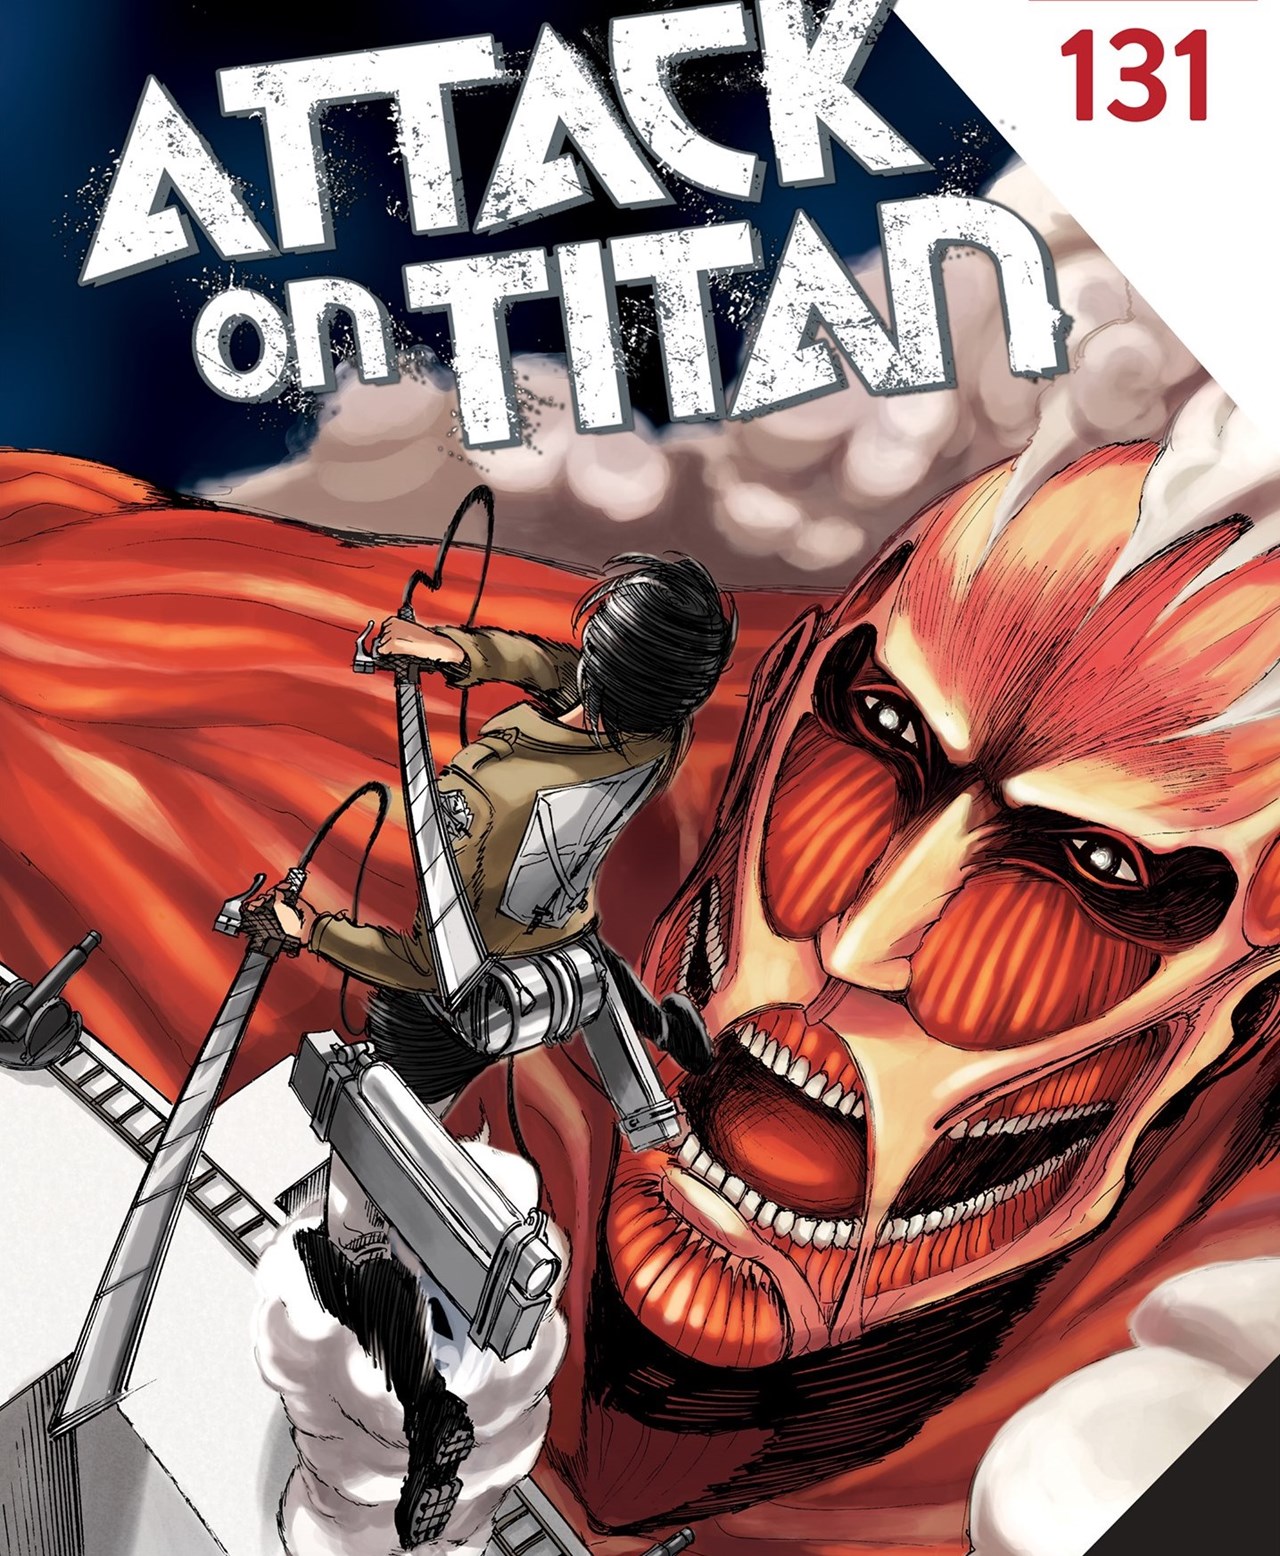 Attack On Titan Season 4 Part 3 Announced; Release Date